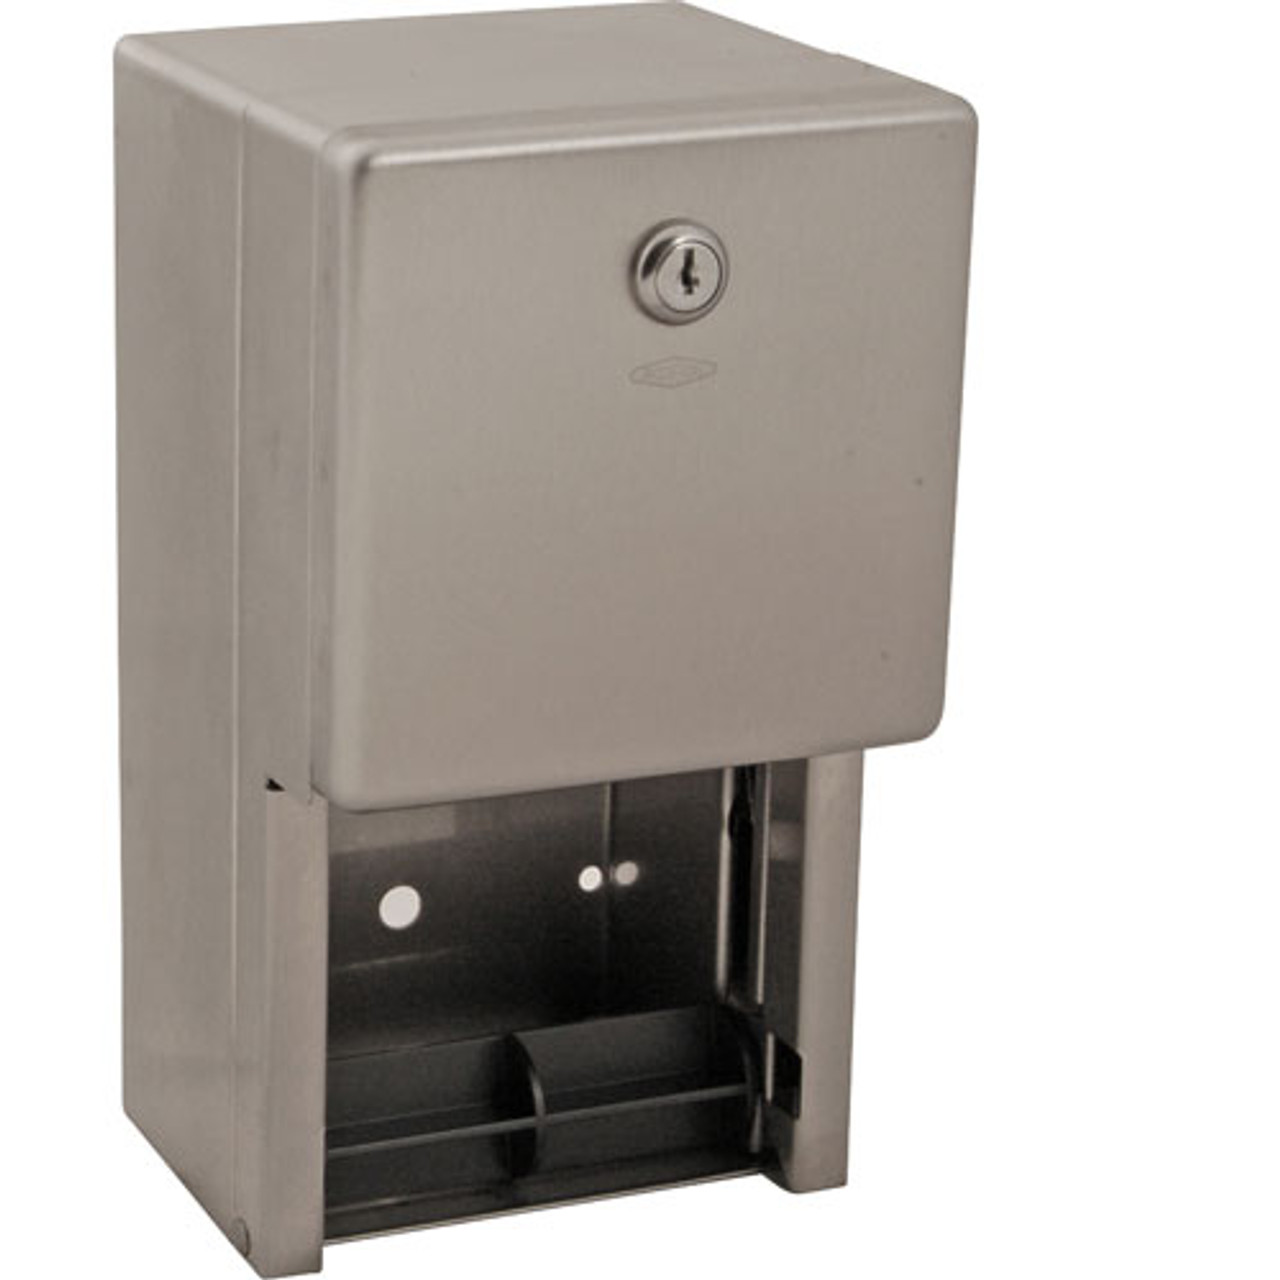 Toilet Tissue Dispenser Multi Roll - Replacement Part For Bobrick B2888